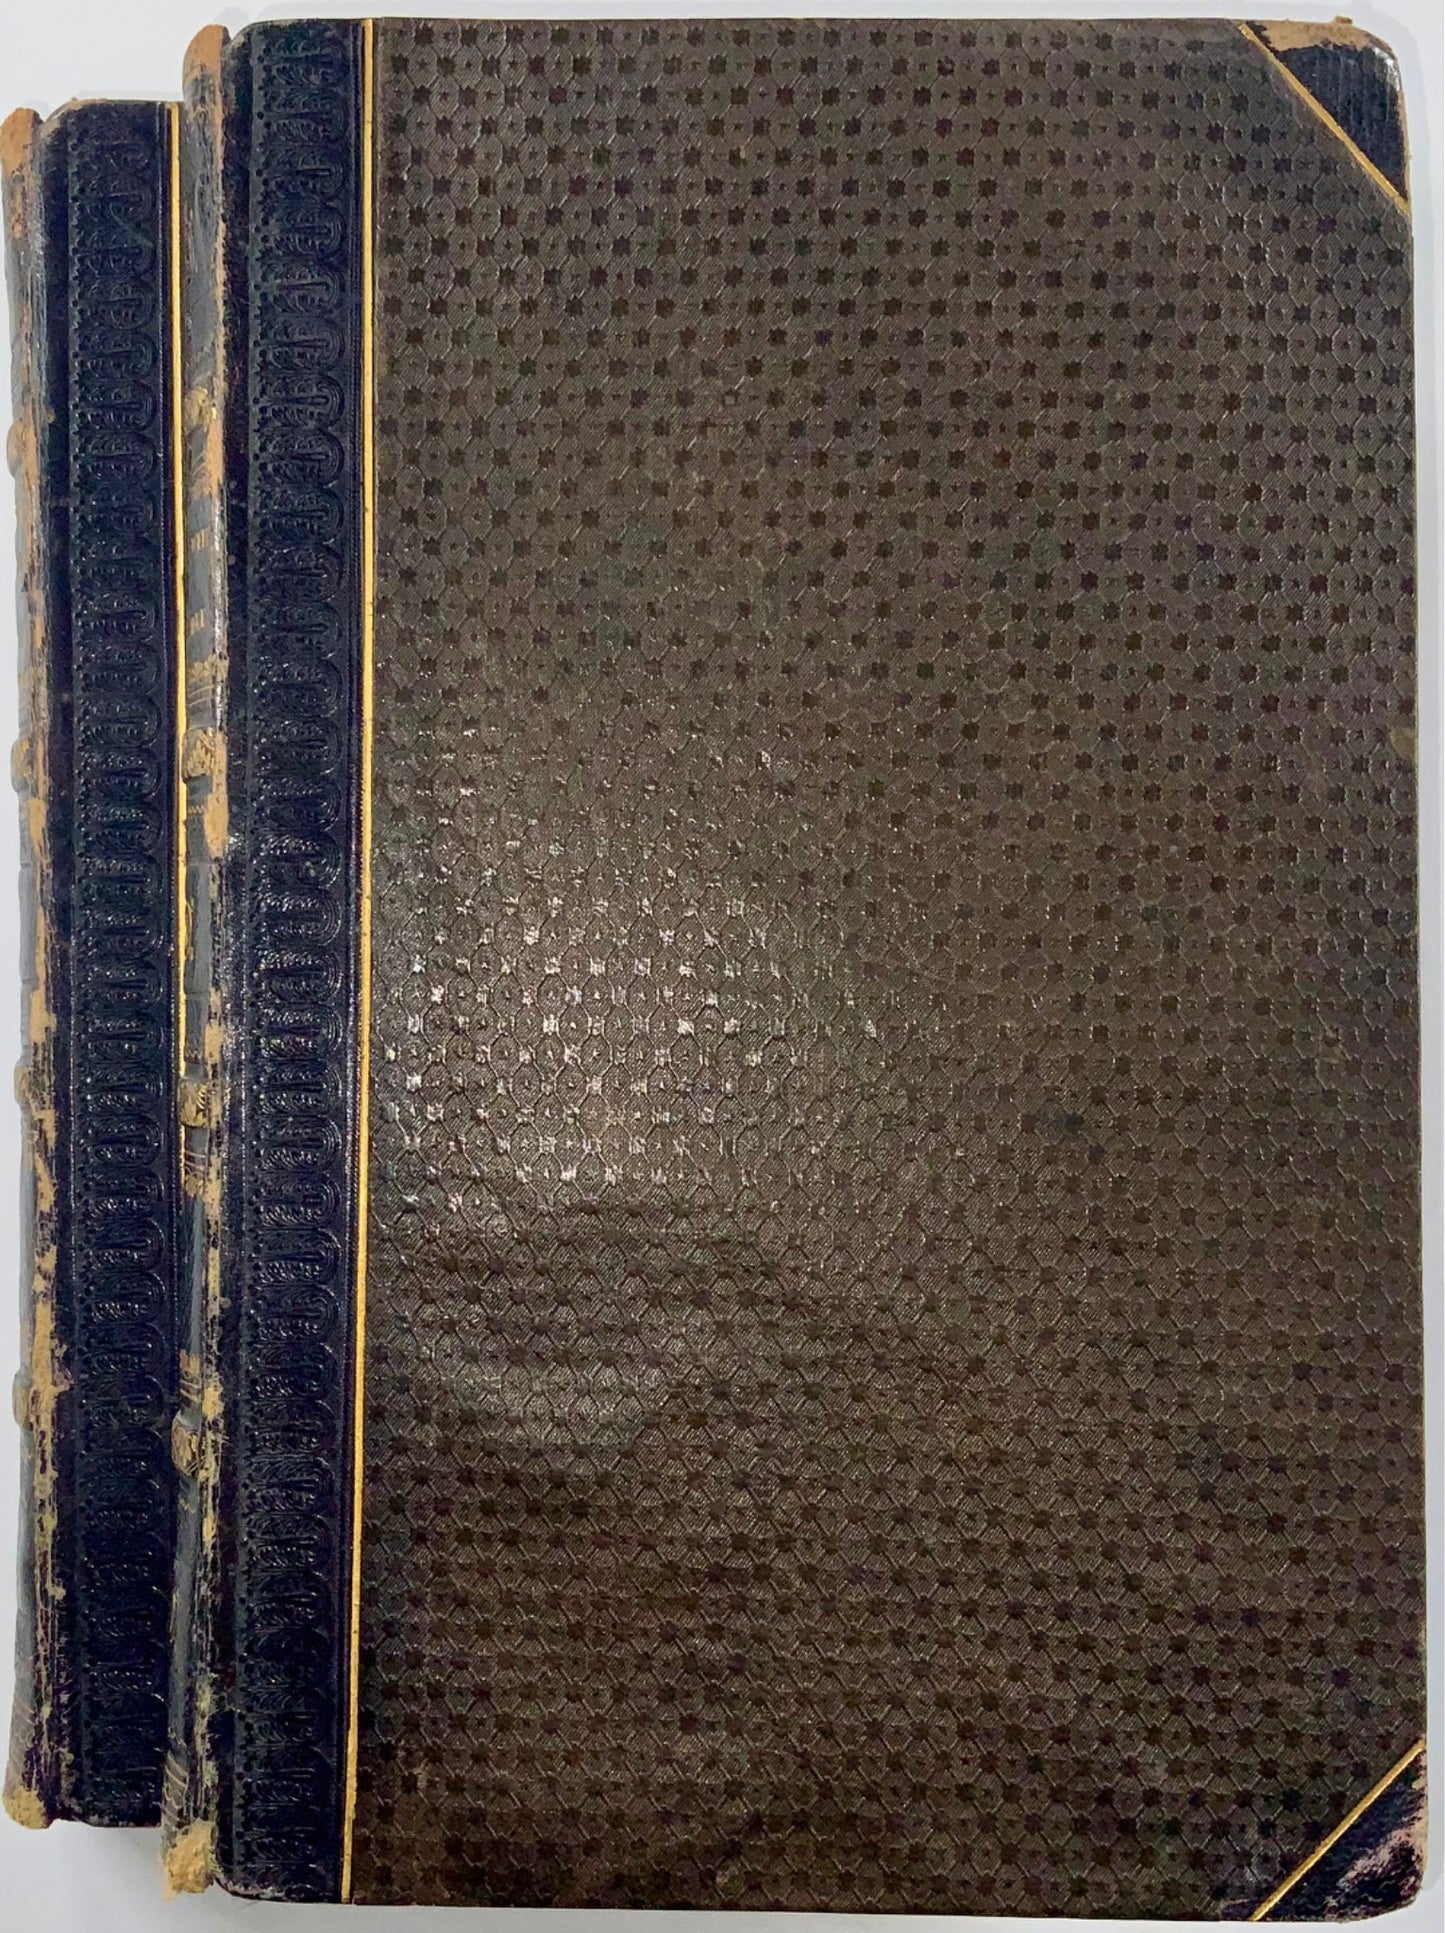 1836-8 H. Zschokke, Switzerland in 85 steel engravings, 4to, 2 vols